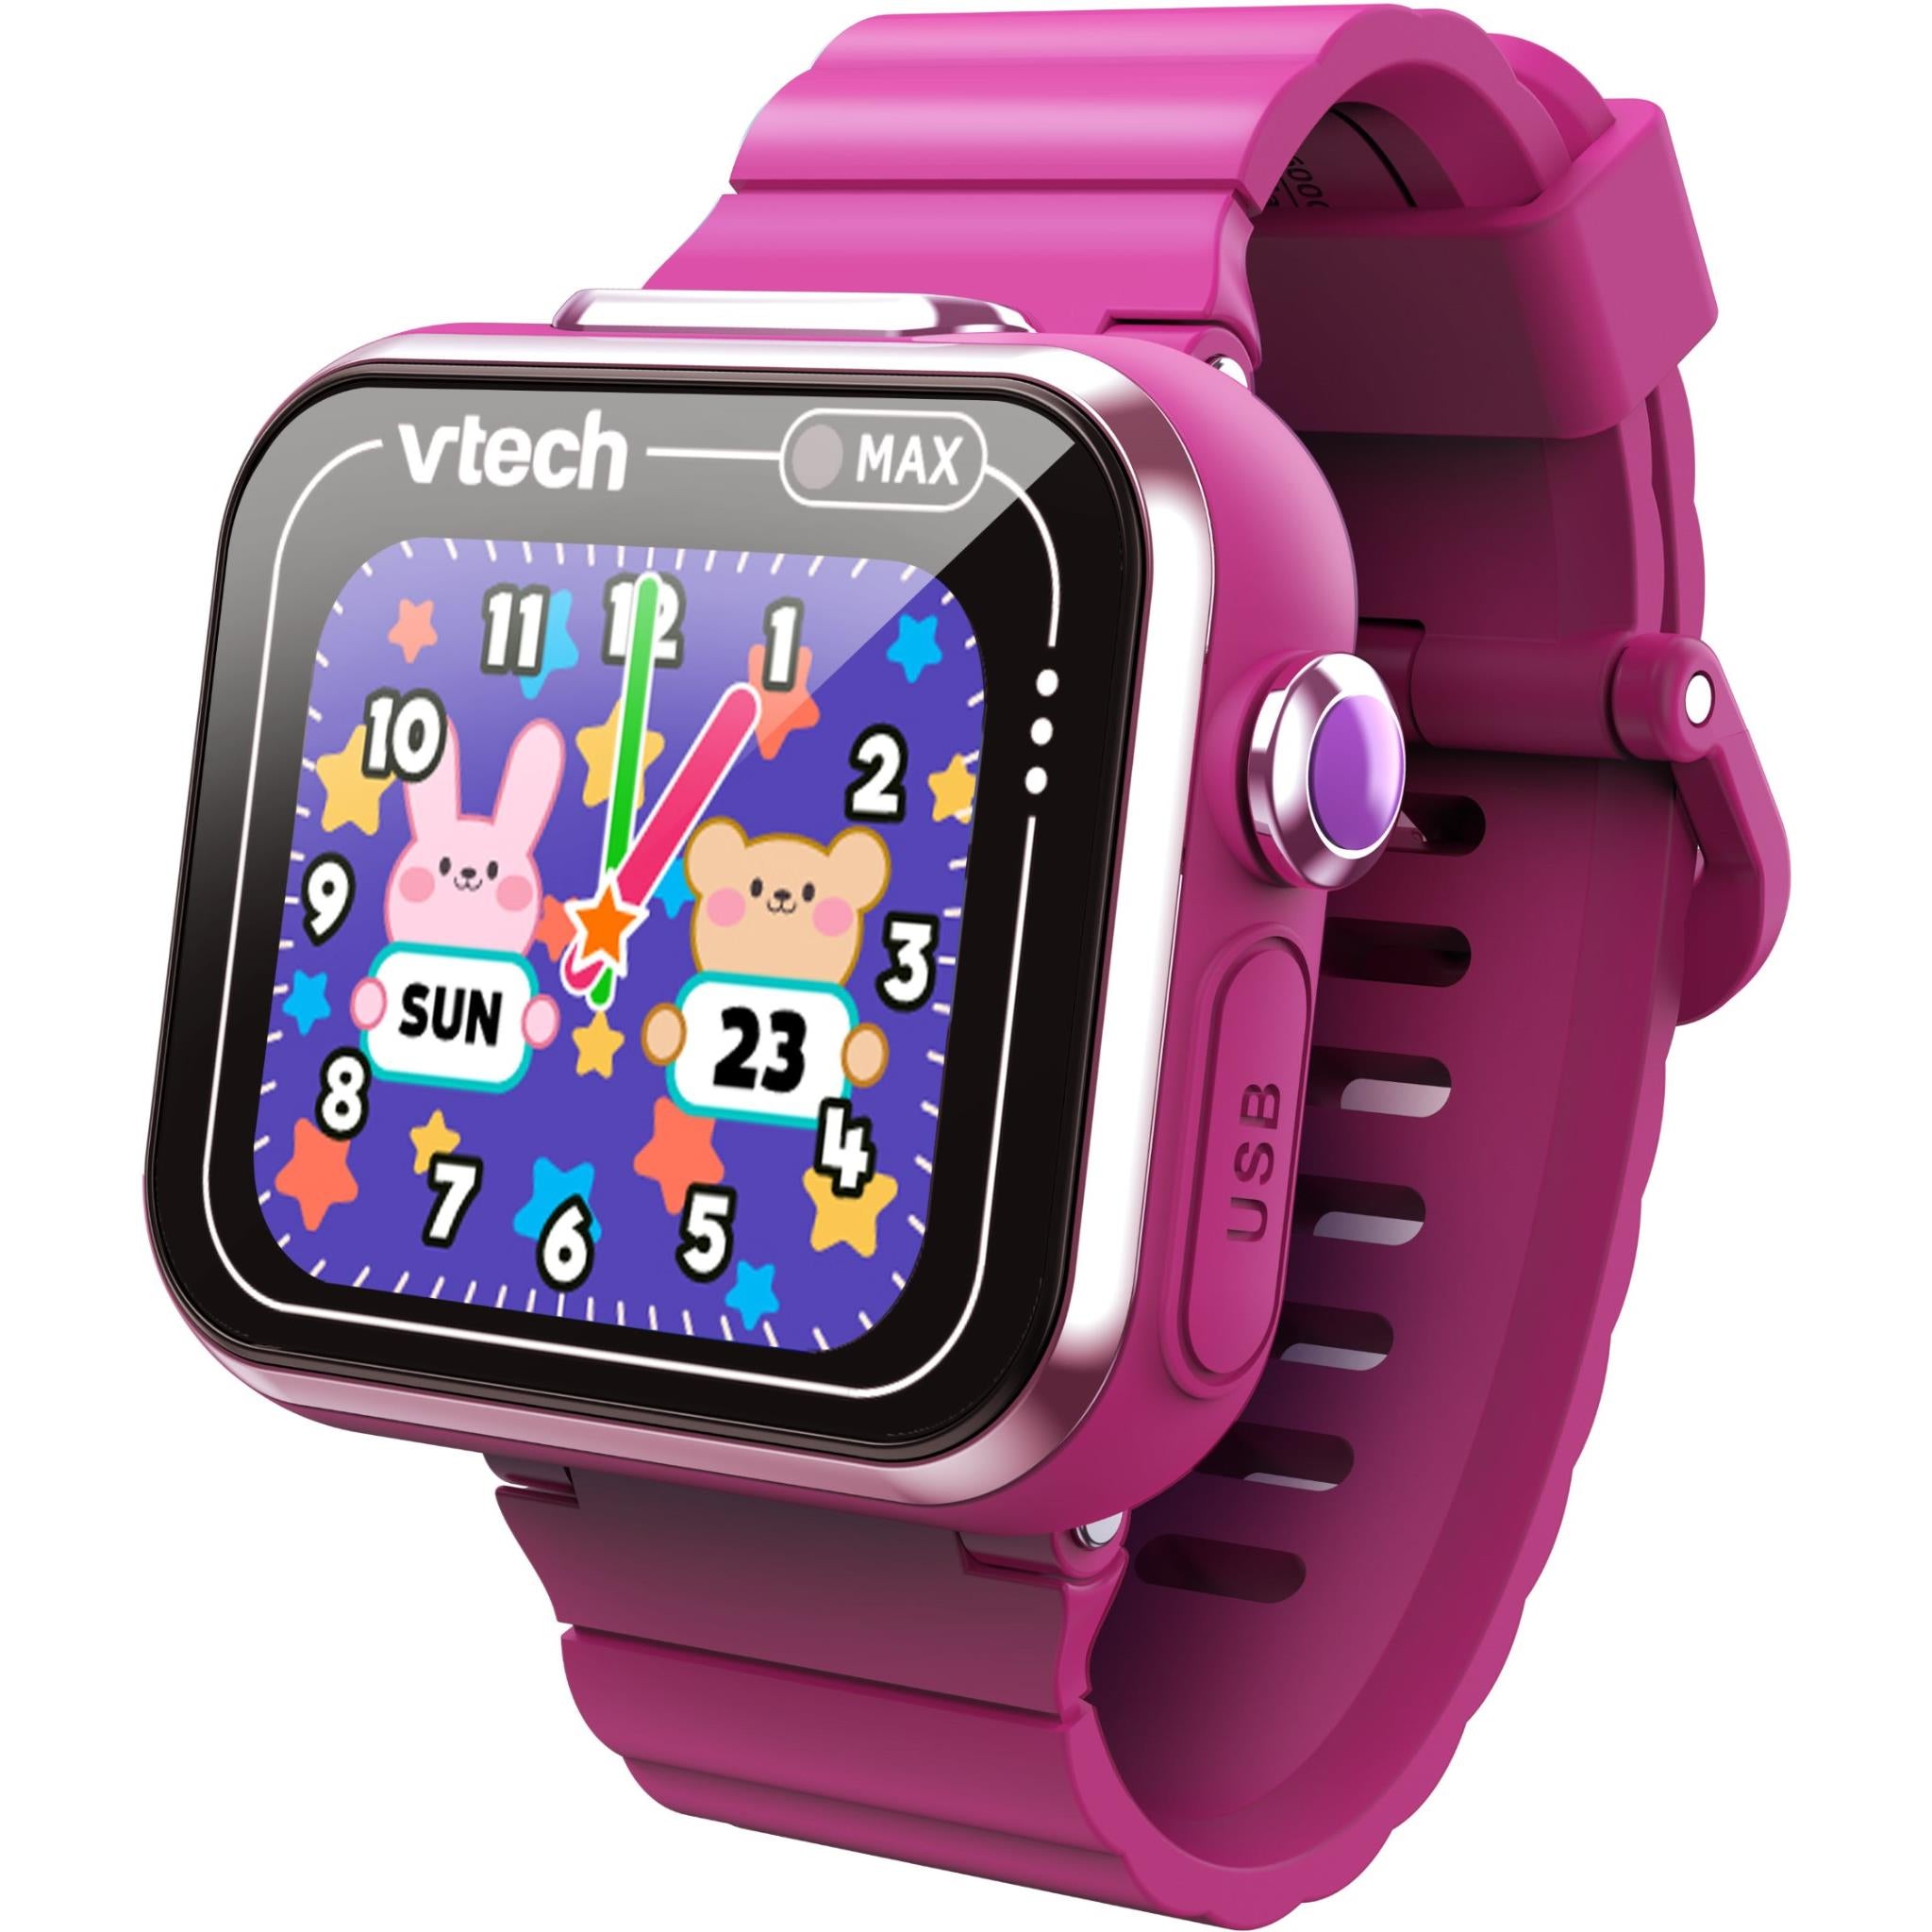 vtech kidizoom smartwatch max (purple)